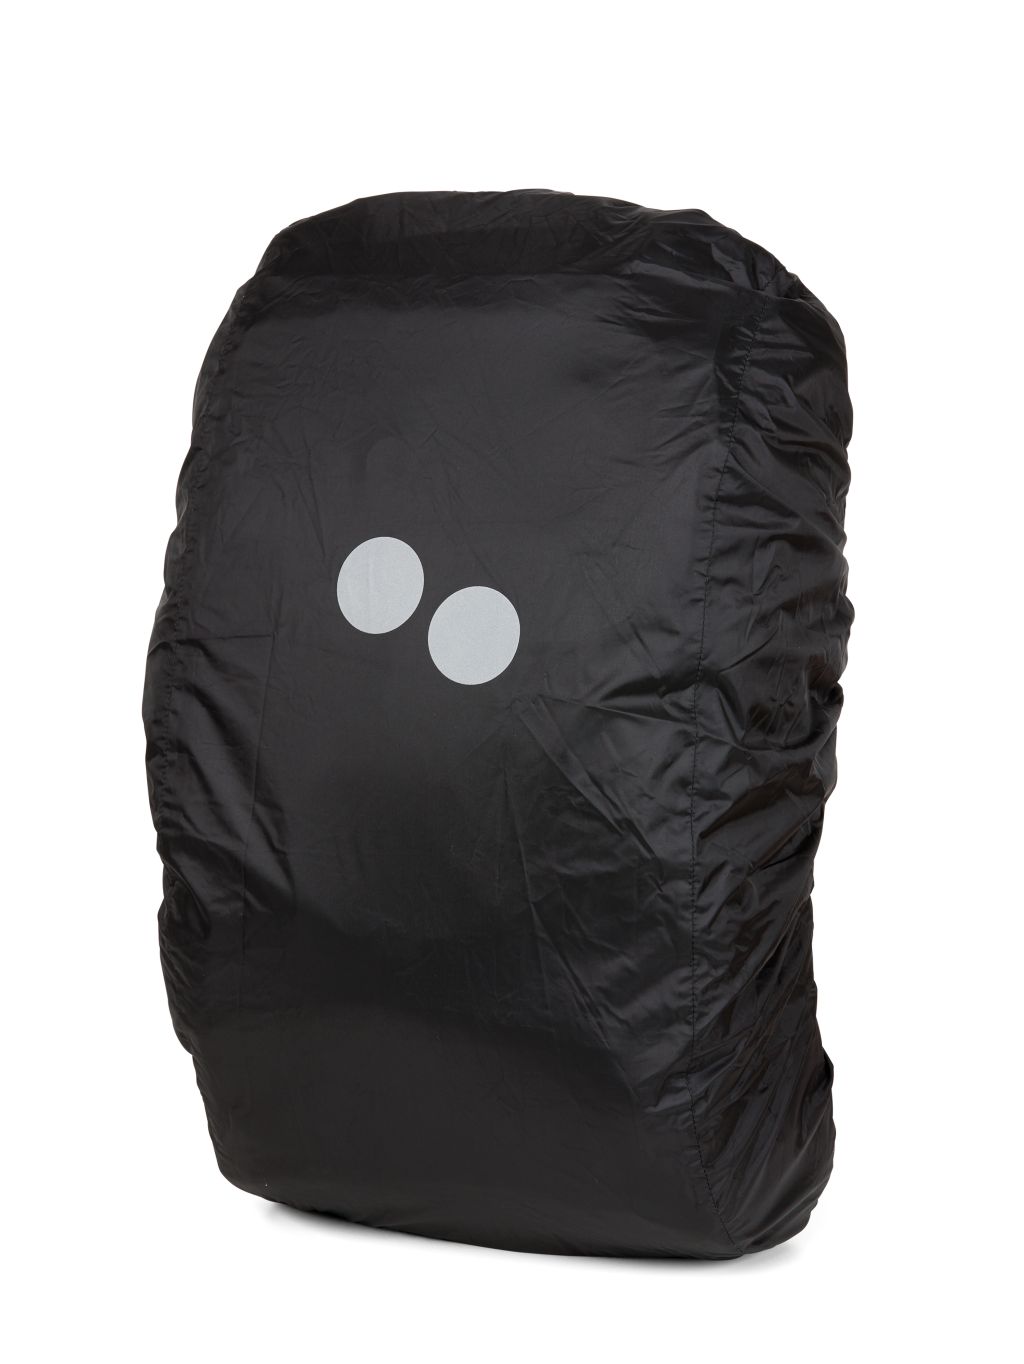 Kover Blok Large Rain Cover Protect Black